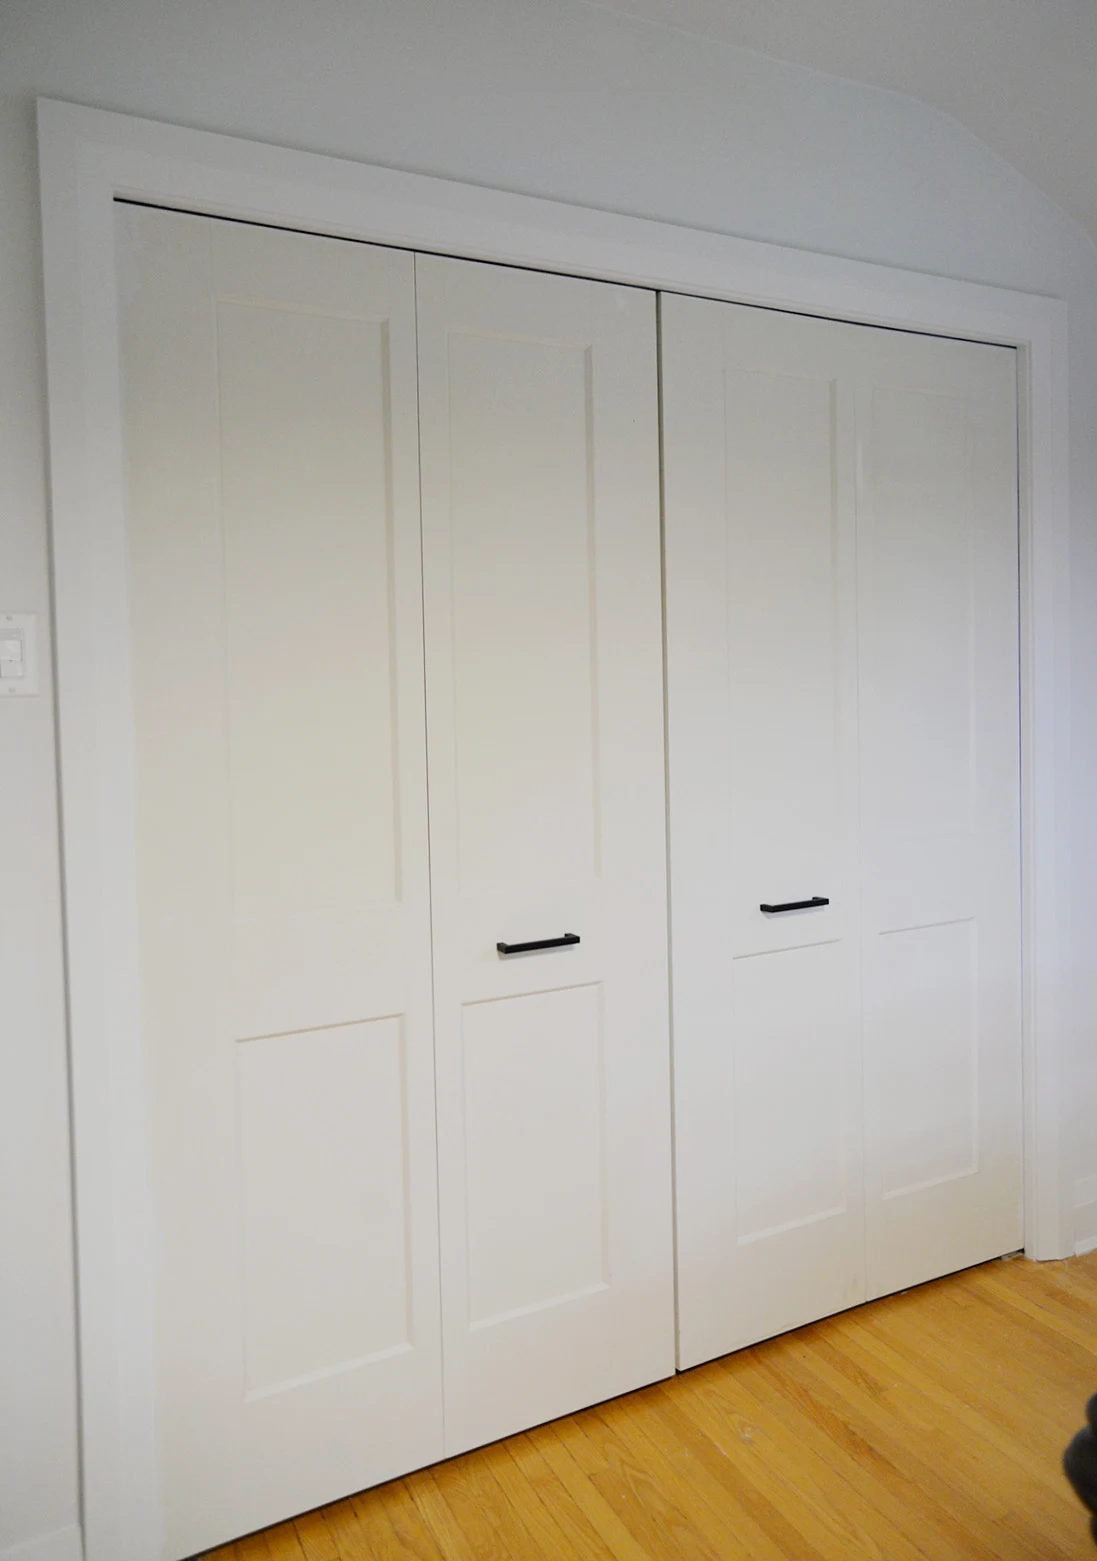 bifold closet door installation, installing bifold door, how to install a bifold closet door, bifold closet door instructions, bifold knob placement